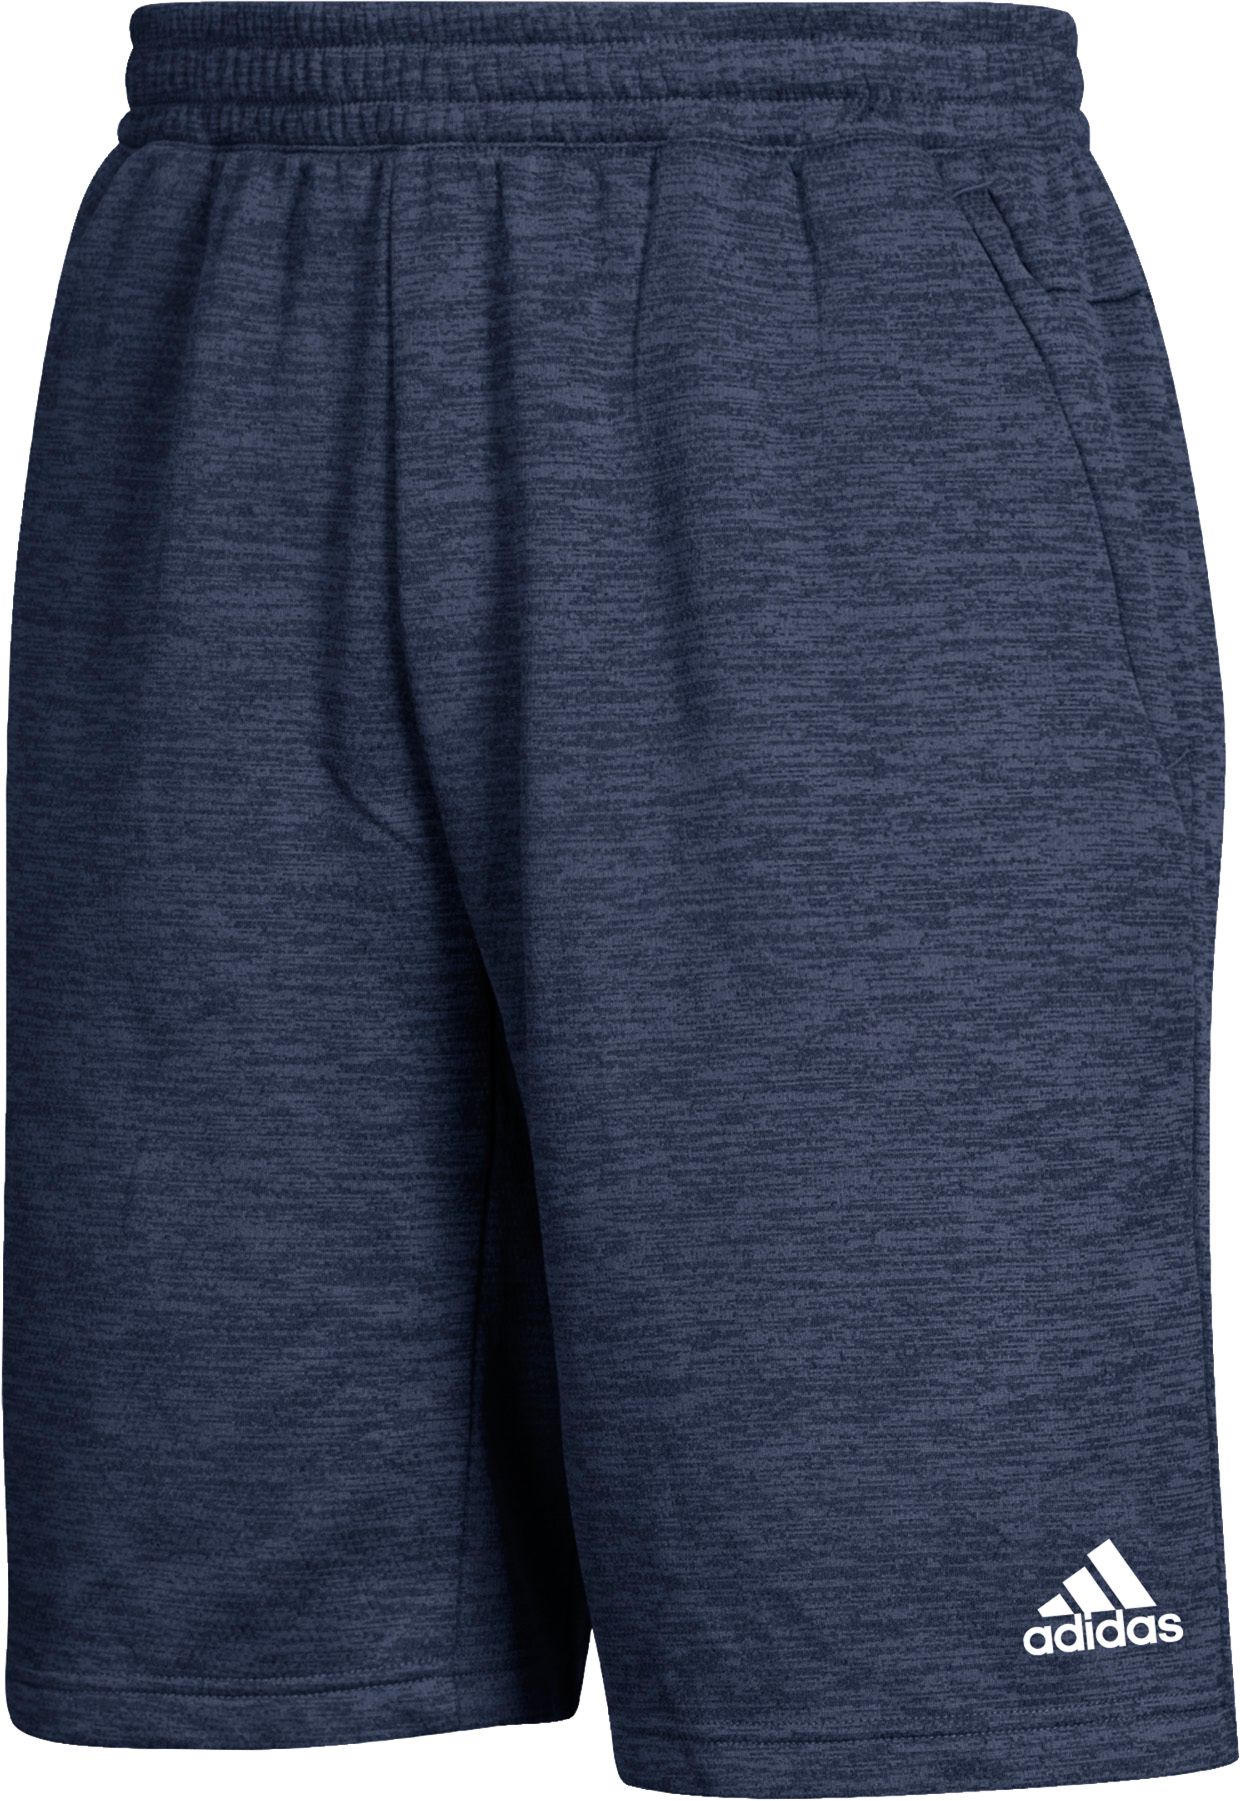 adidas gym shorts with pockets